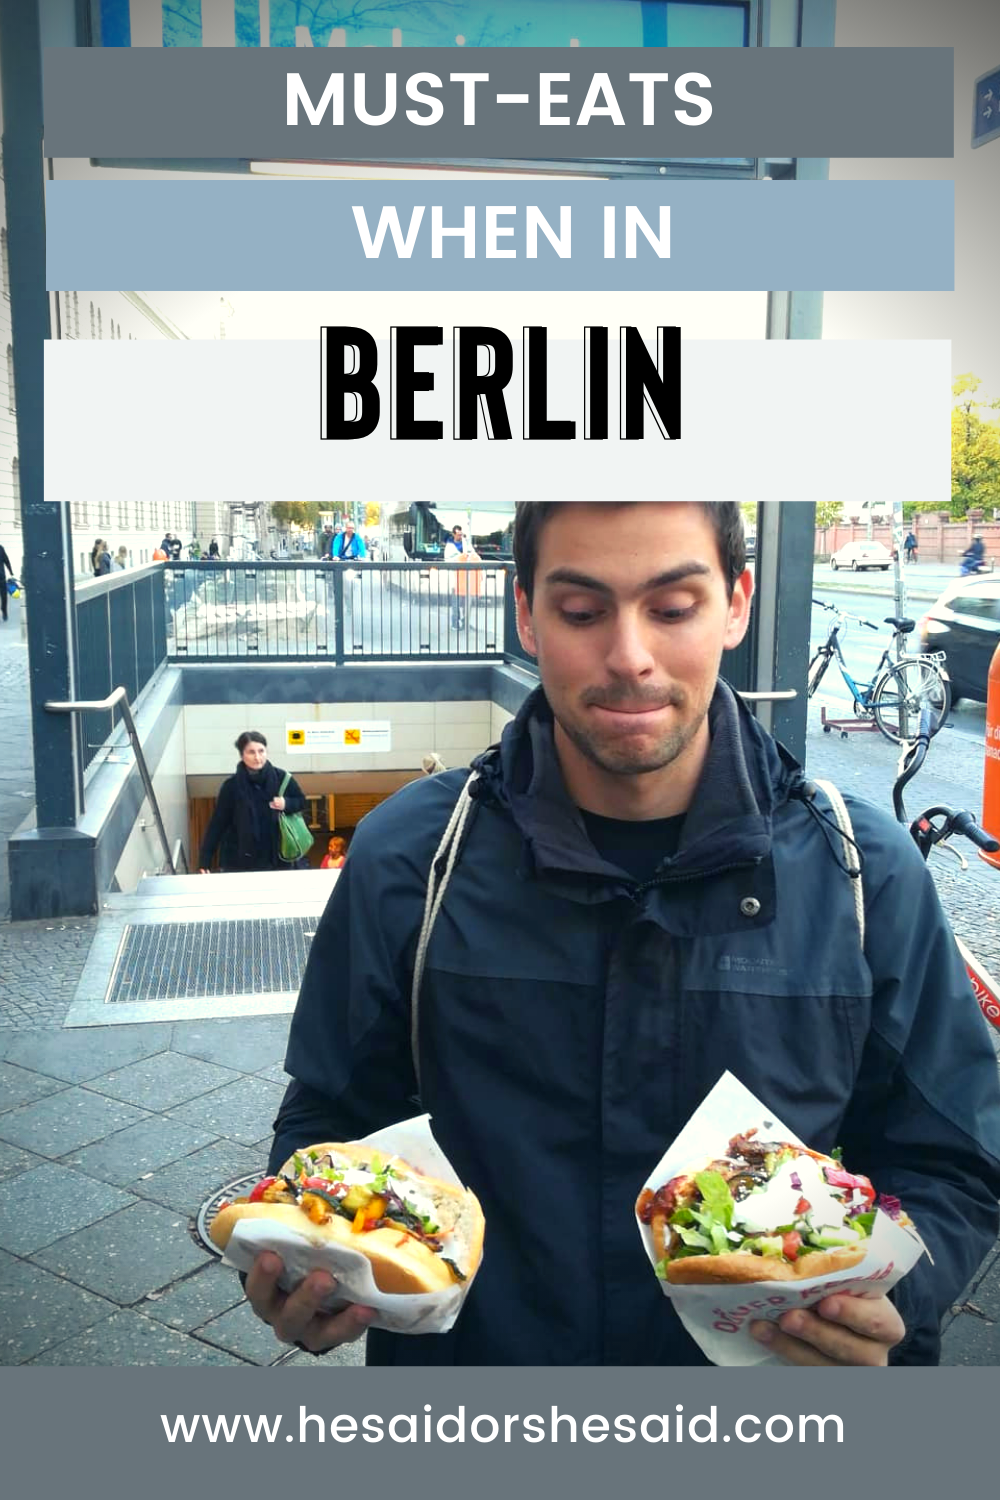 Must-eats when in Berlin by hesaidorshesaid